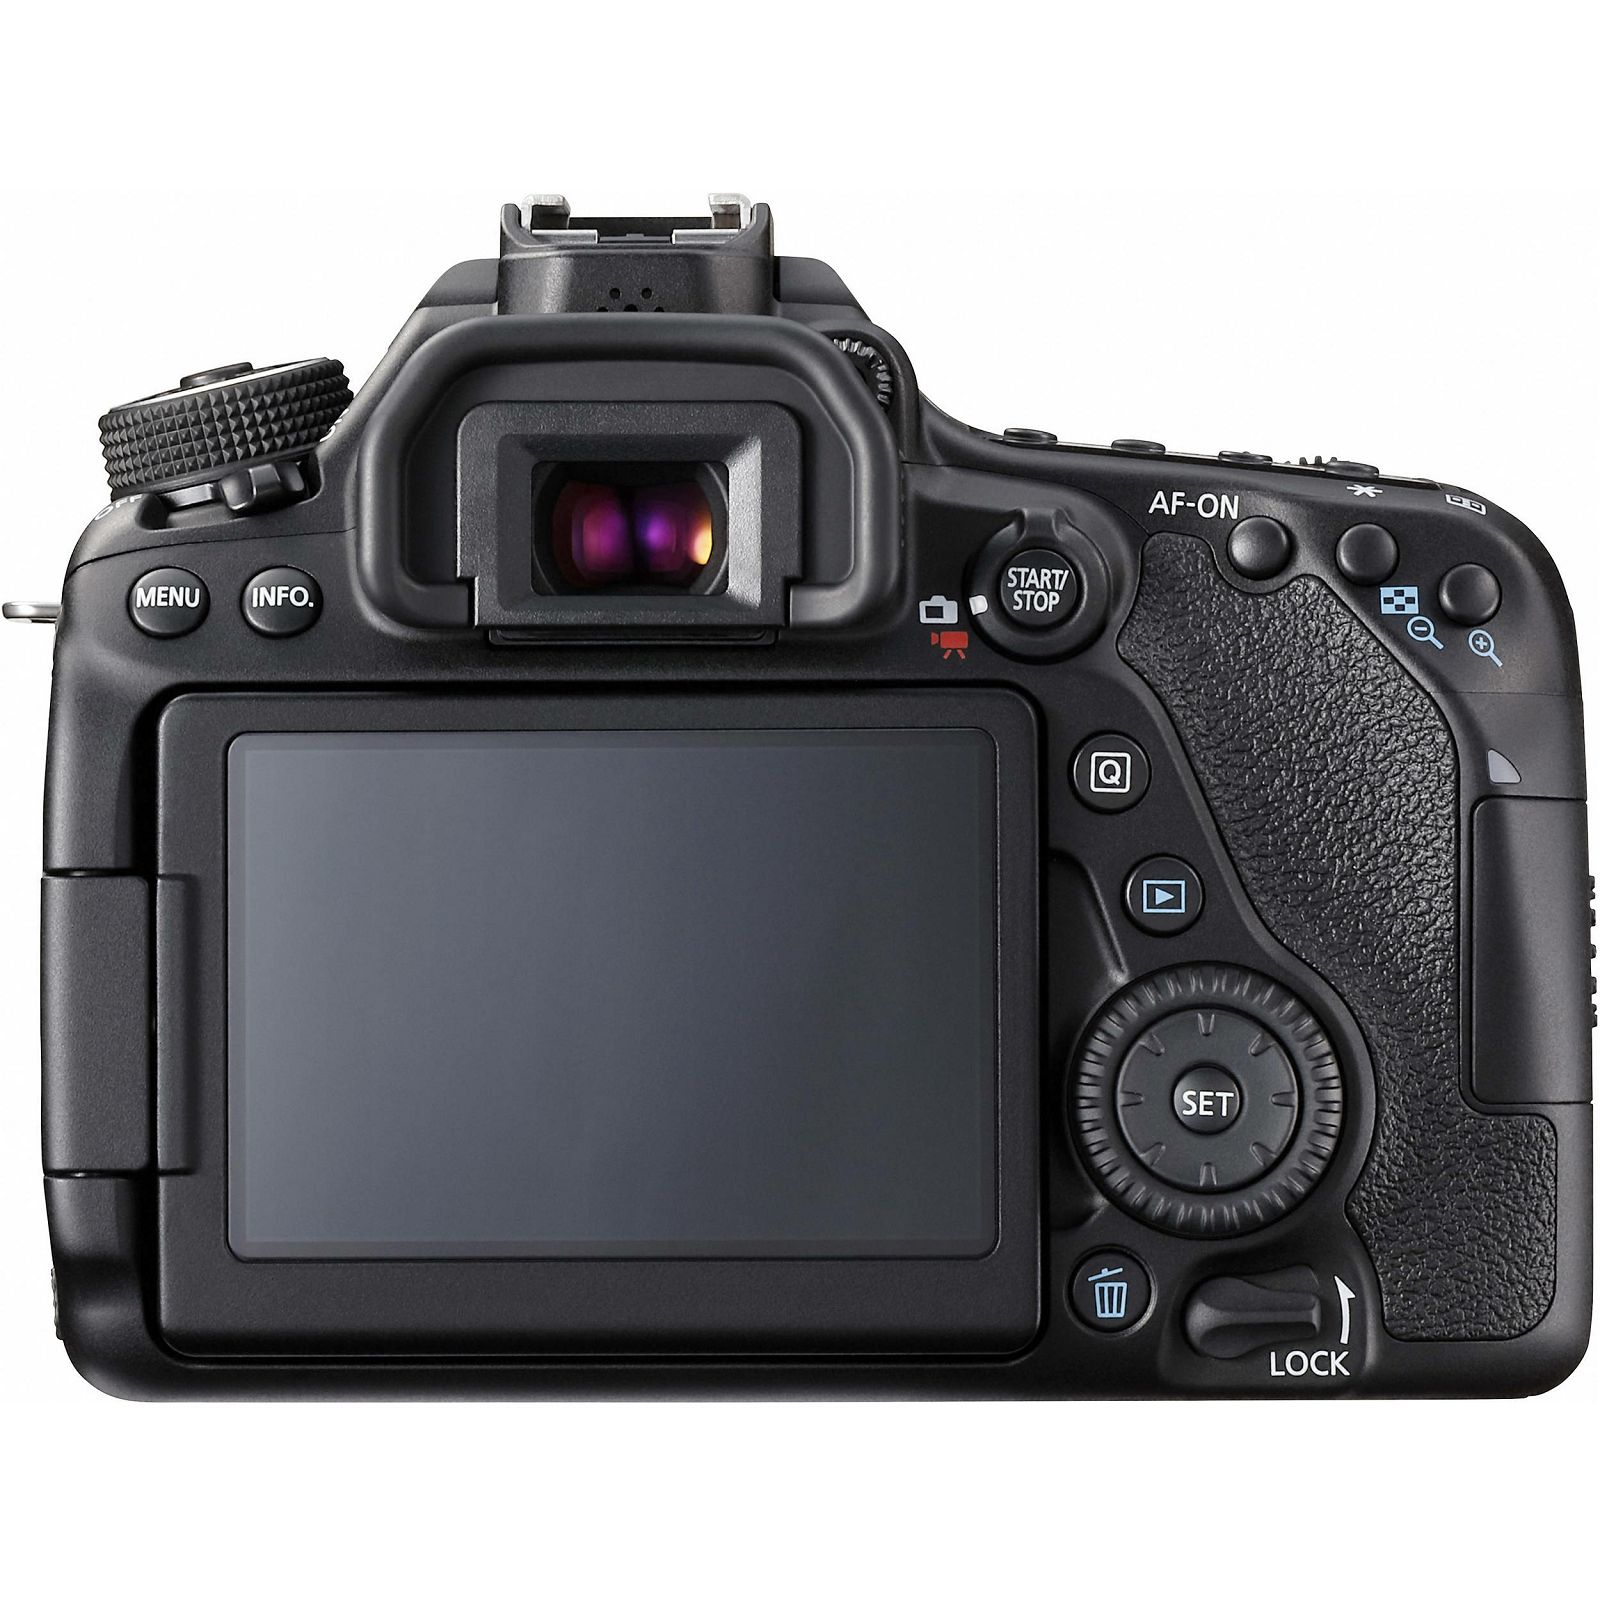 Canon EOS 80D + 18-55 IS STM DSLR digitalni fotoaparat s objektivom EF-S 18-55mm f/3.5-5.6 (1263C011AA)